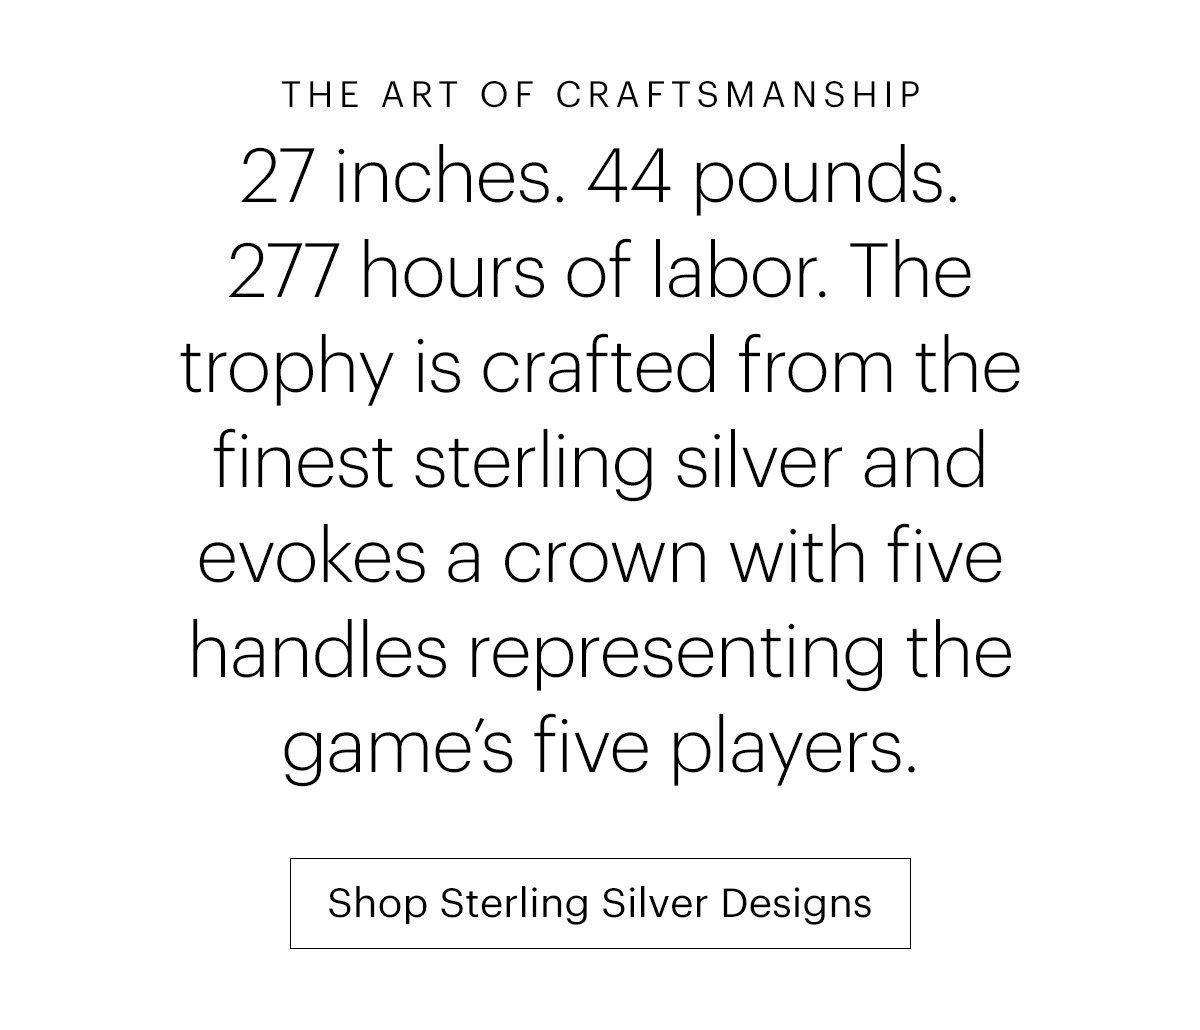 Shop Sterling Silver Designs